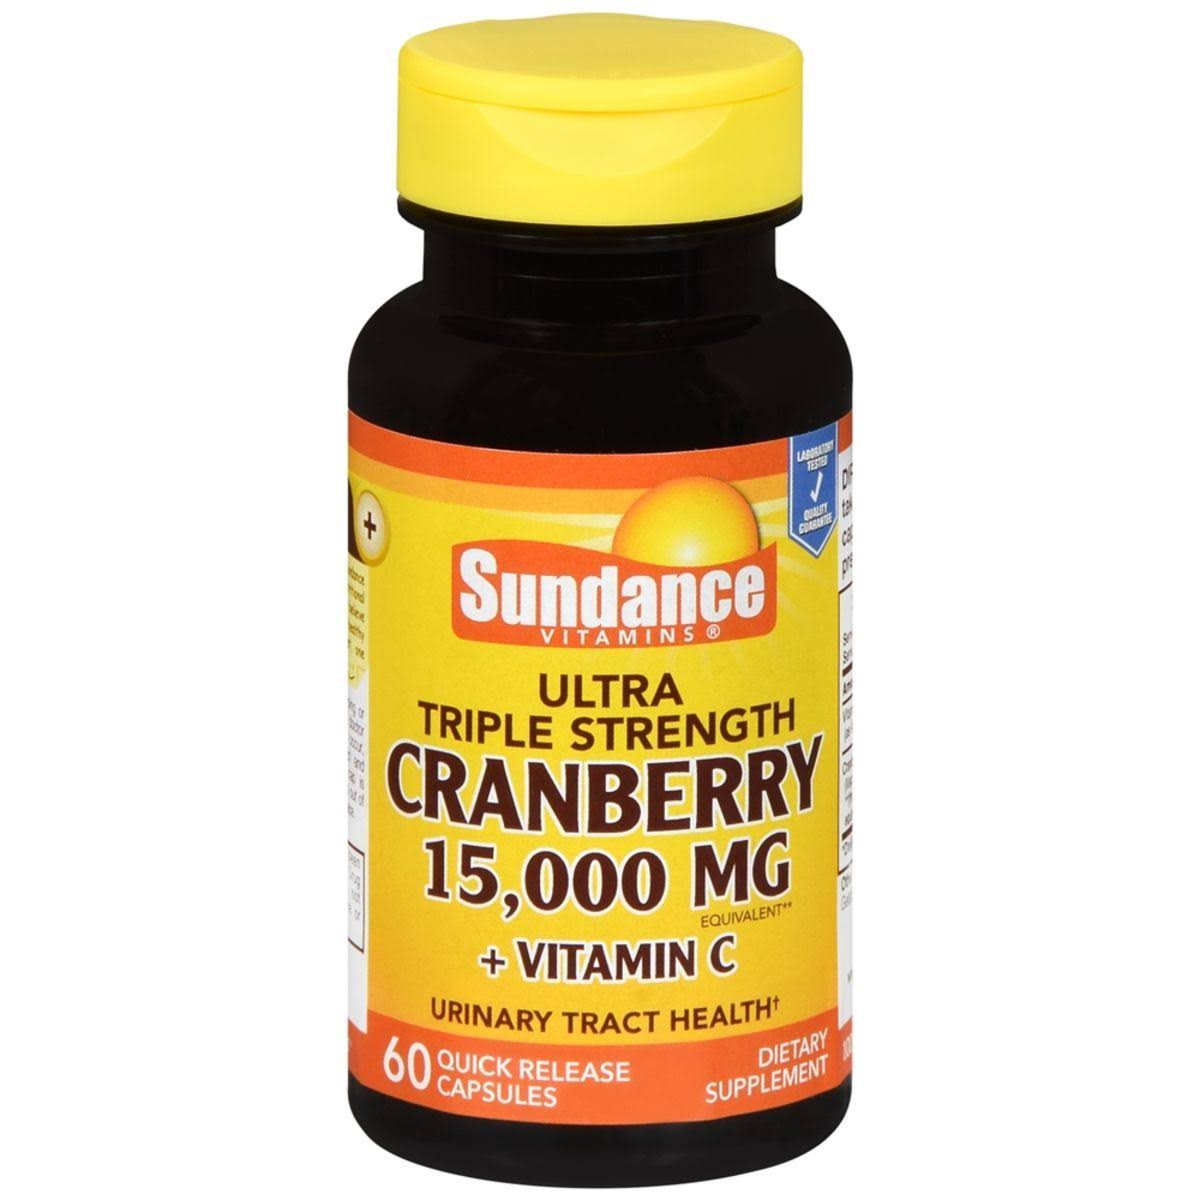 Sundance Vitamins Ultra Triple Strength Cranberry 15,000 MG + Vitamin C - 60ct